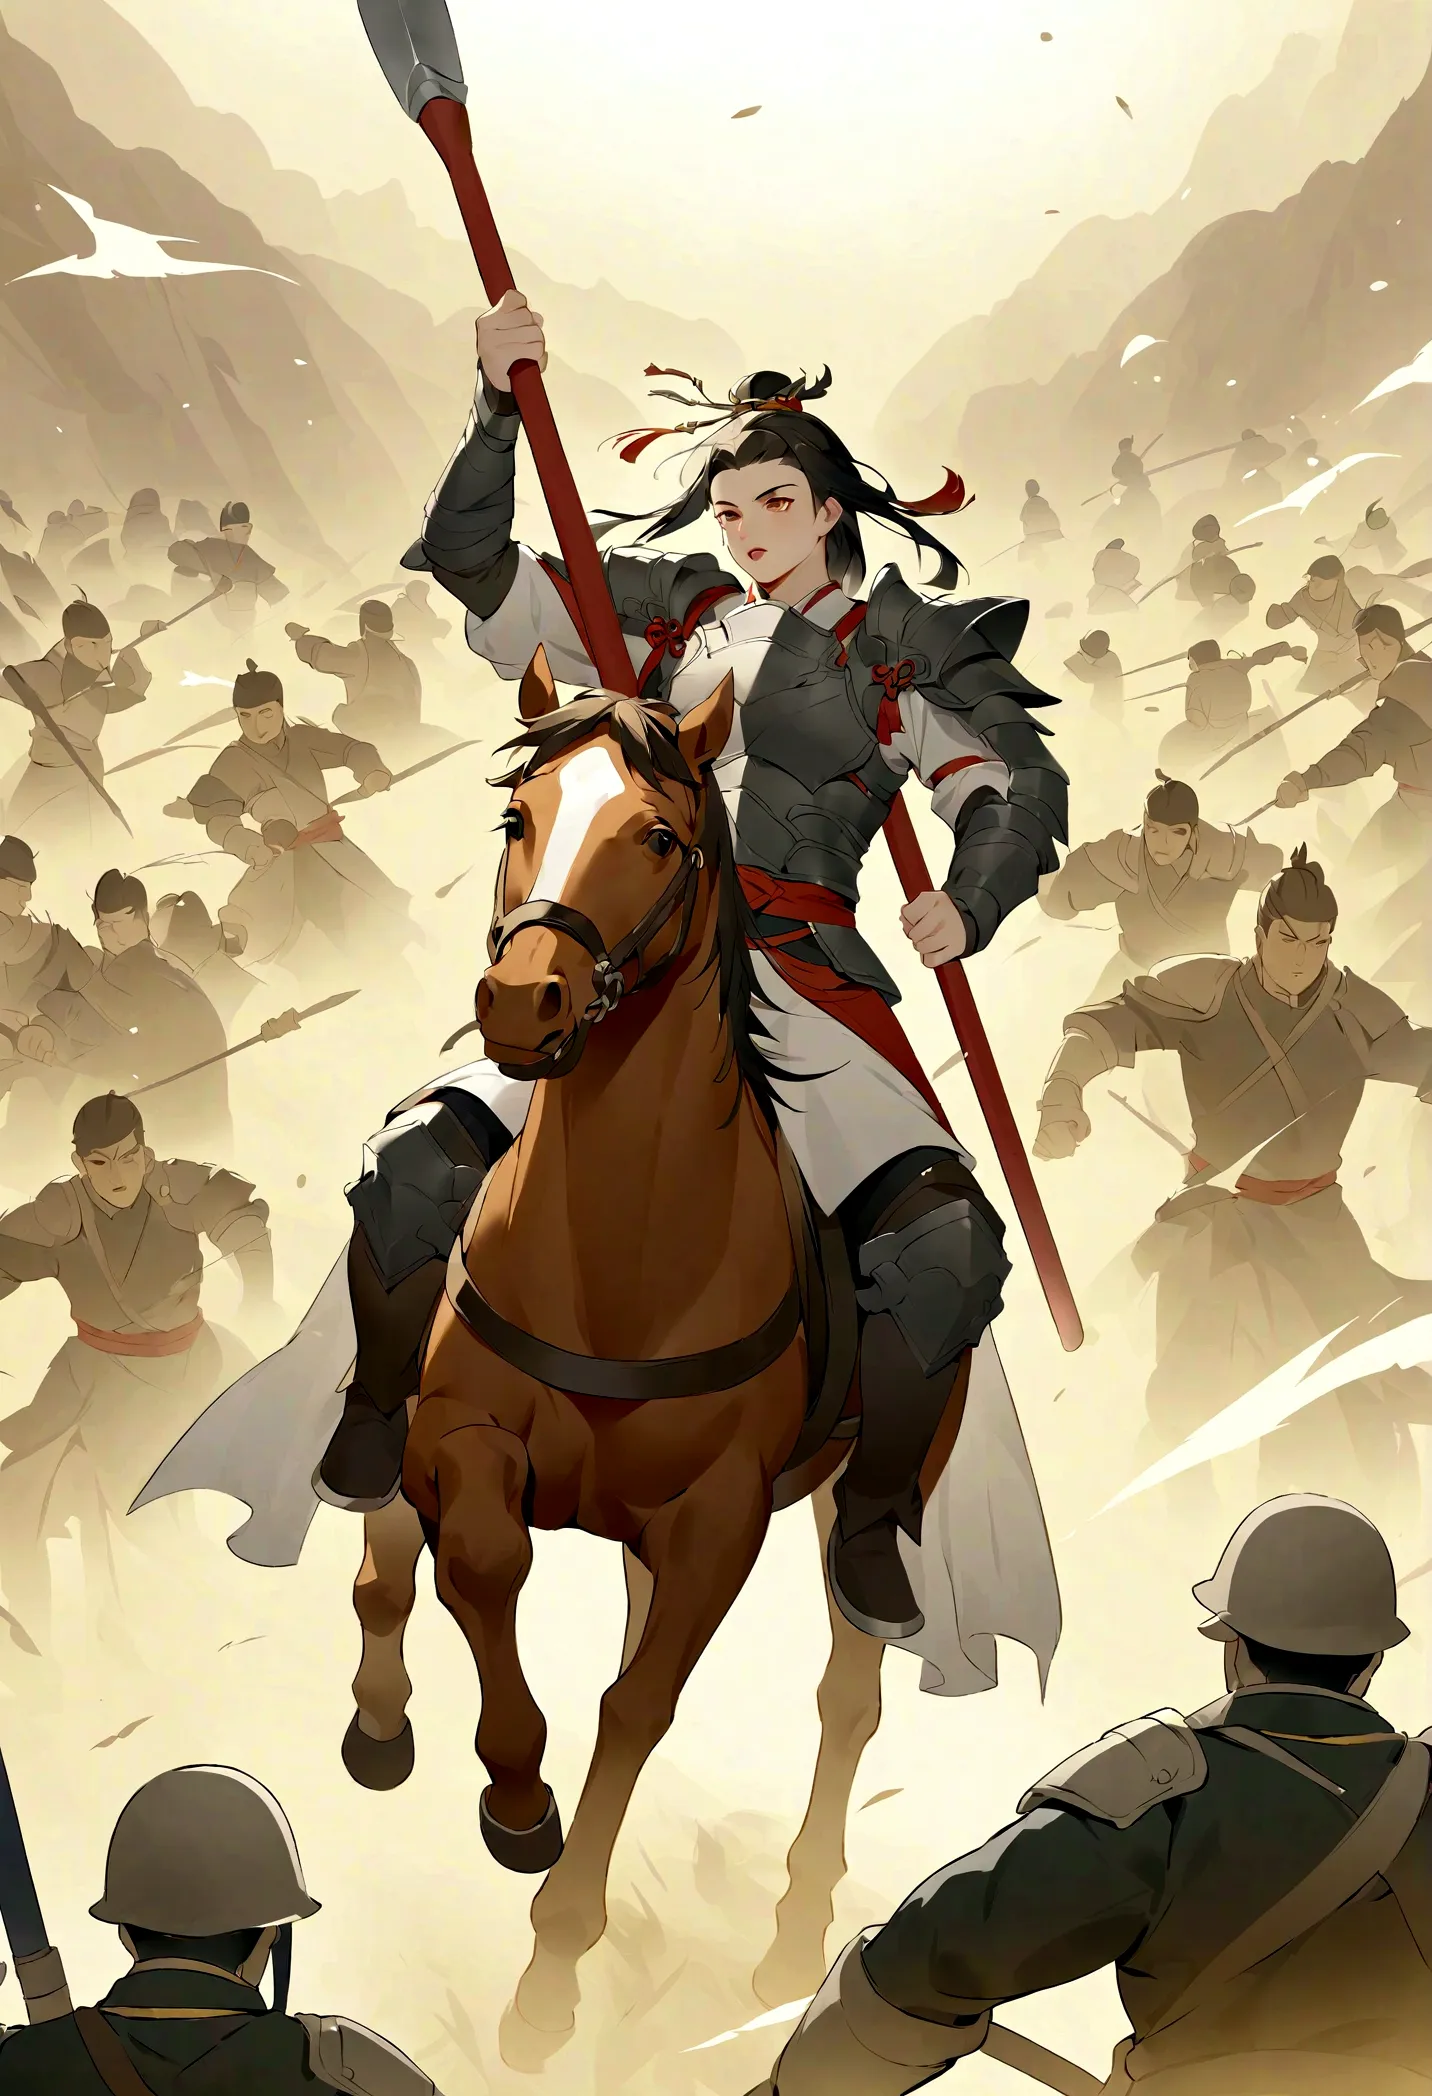 yaya，Three Kingdoms, Zhao Zilong, horse riding, wielding spears, Heroic and fearless, Wear armor, Behind it is the battlefield, ...